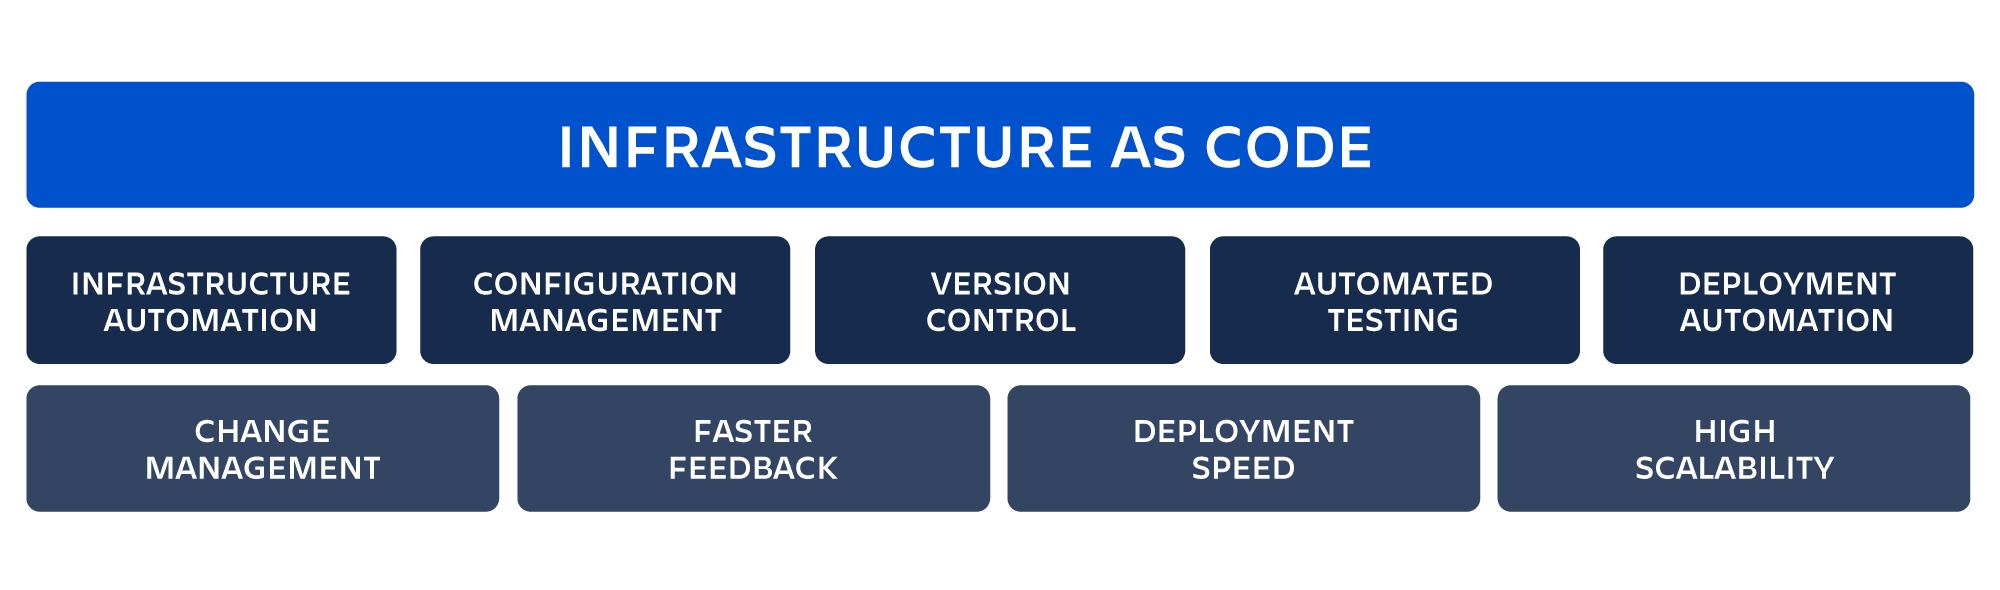 Infrastructure code image